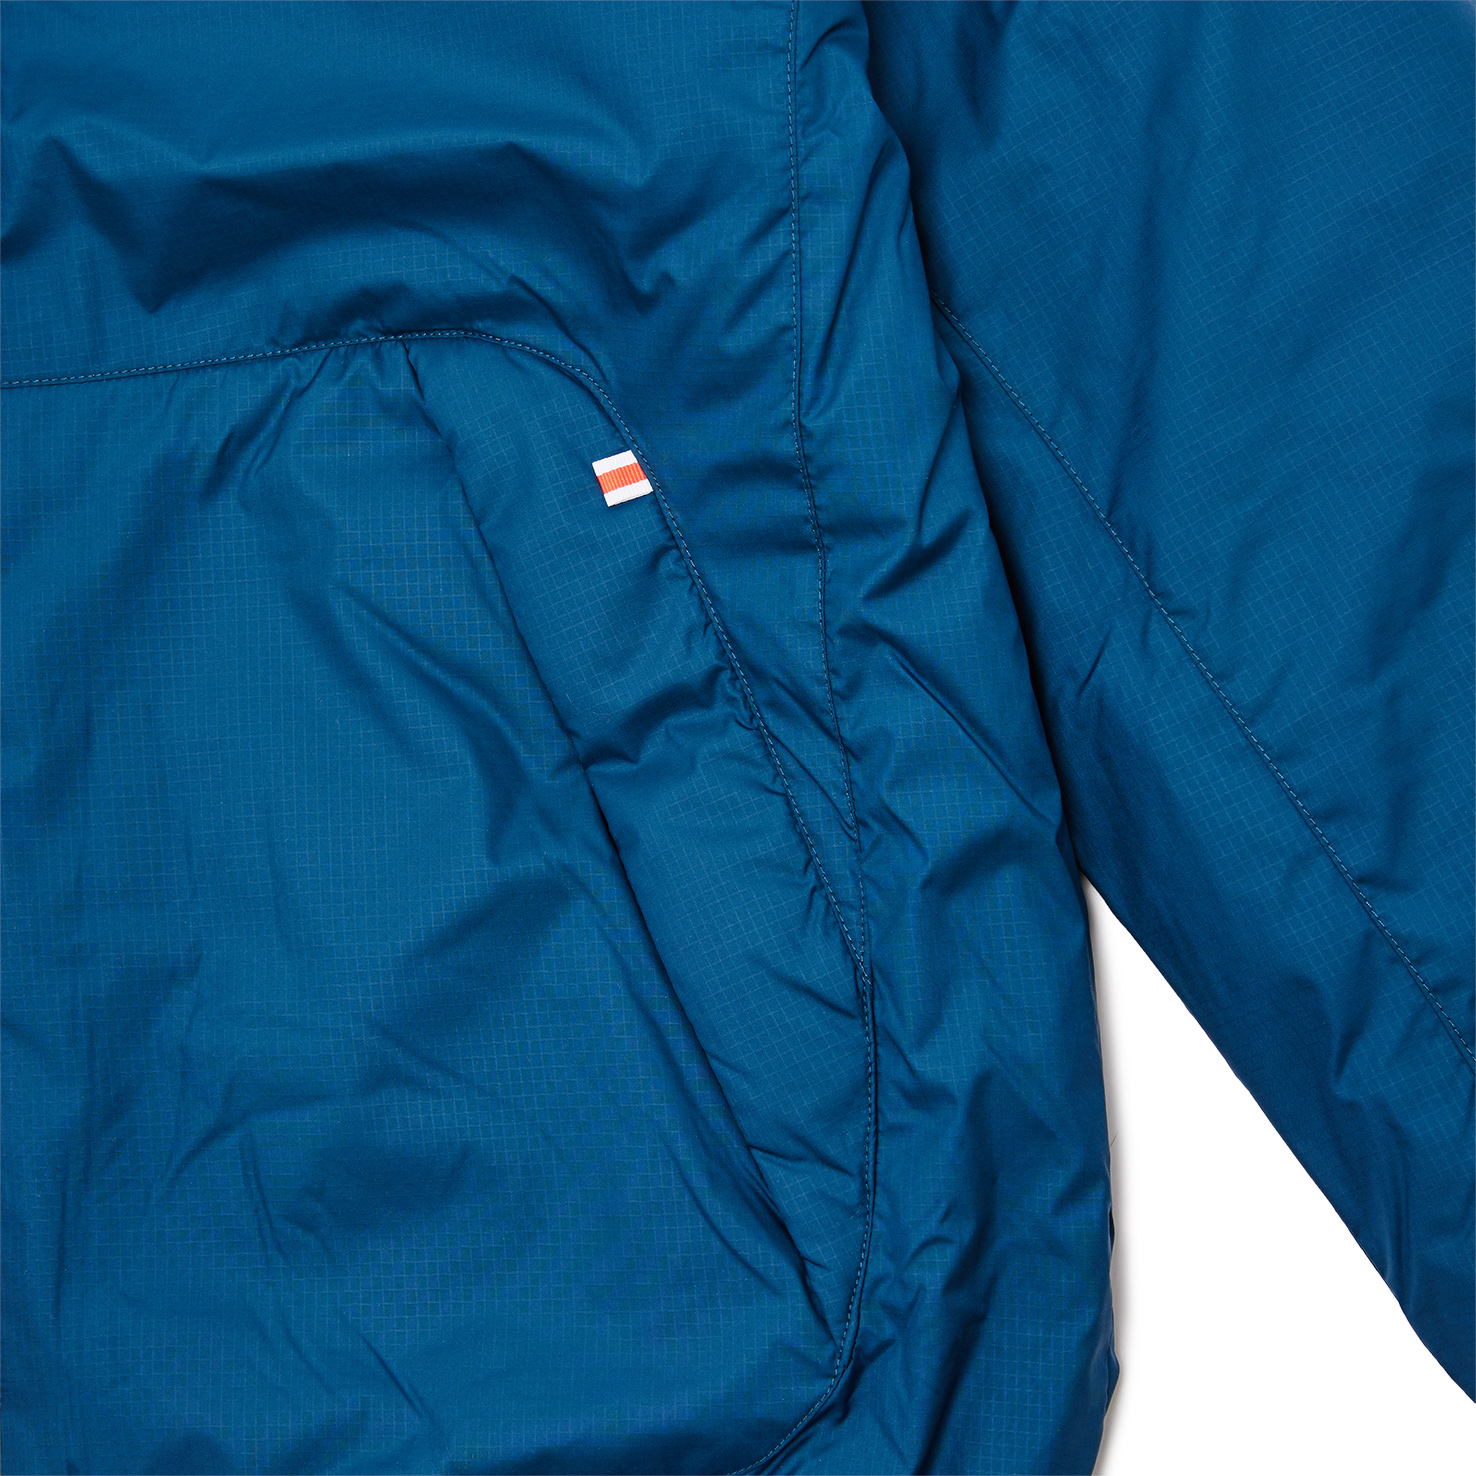 PUMA x HELLY HANSEN Rev. Padded Jacket I PUMA, размер L, цвет синий PM532841 - фото 4